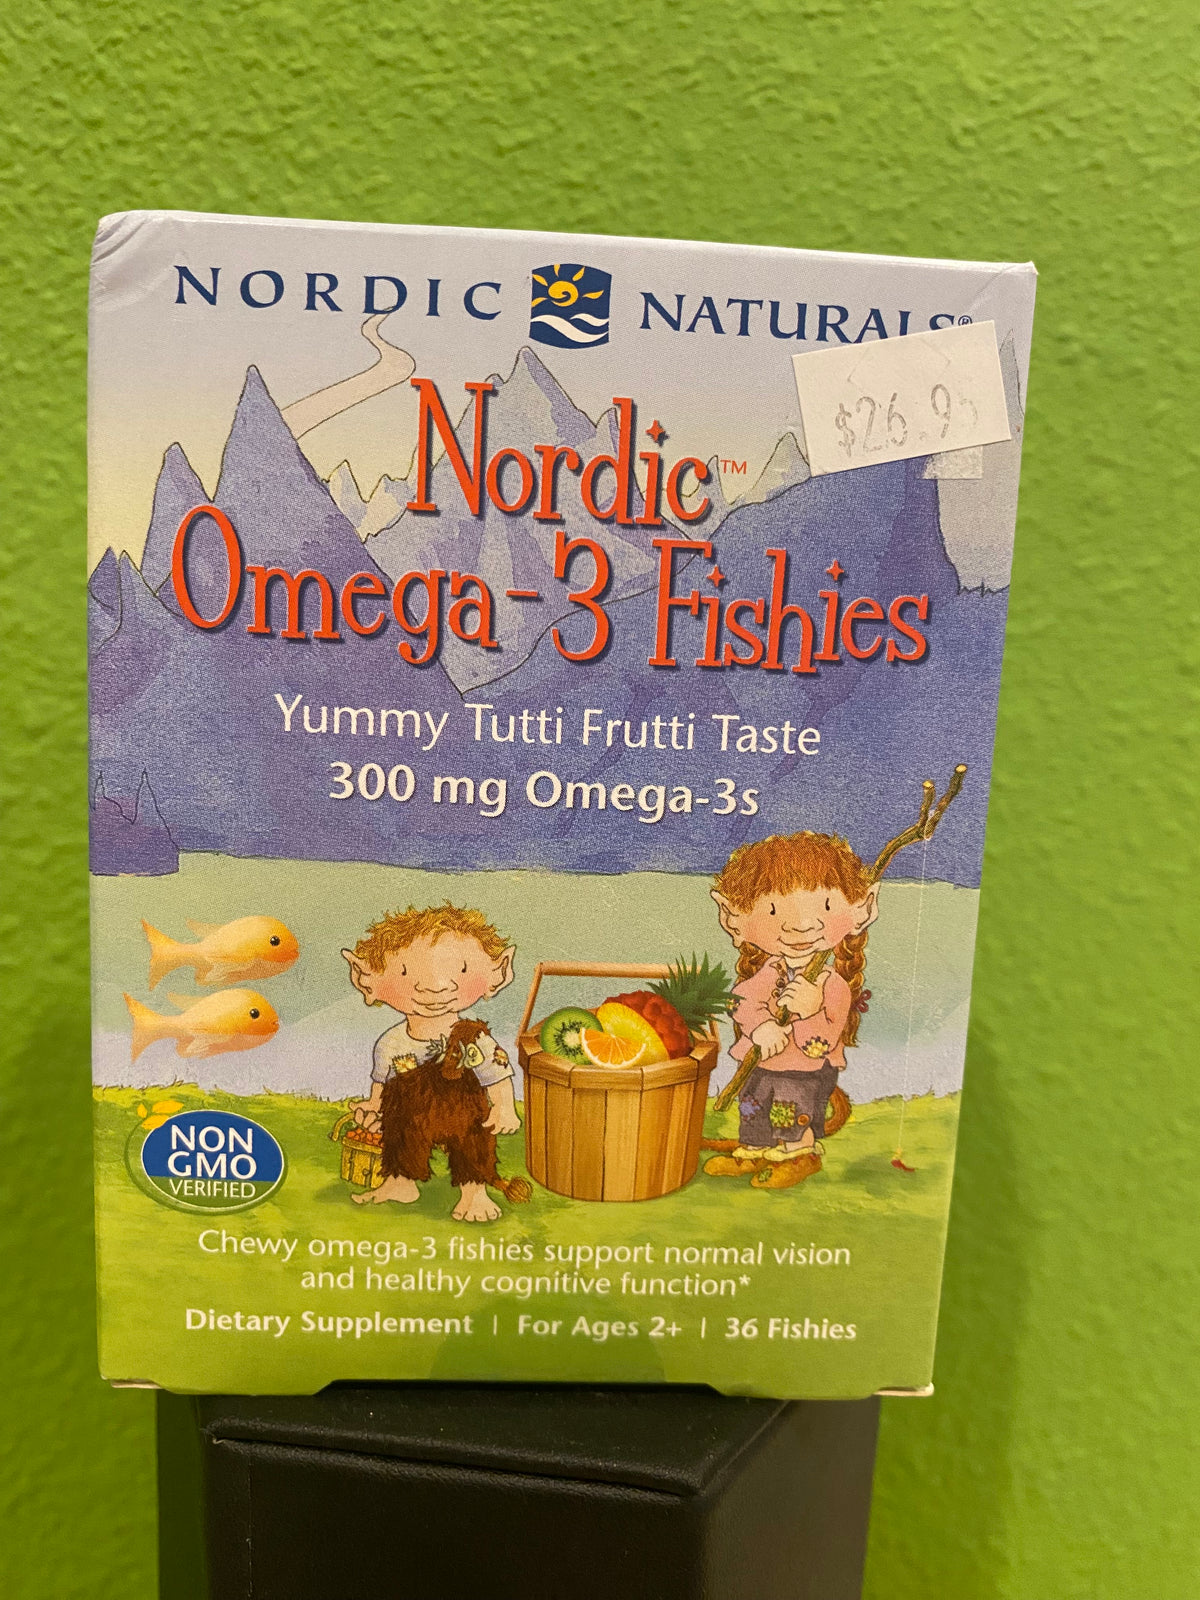 Omega-3 Fishies